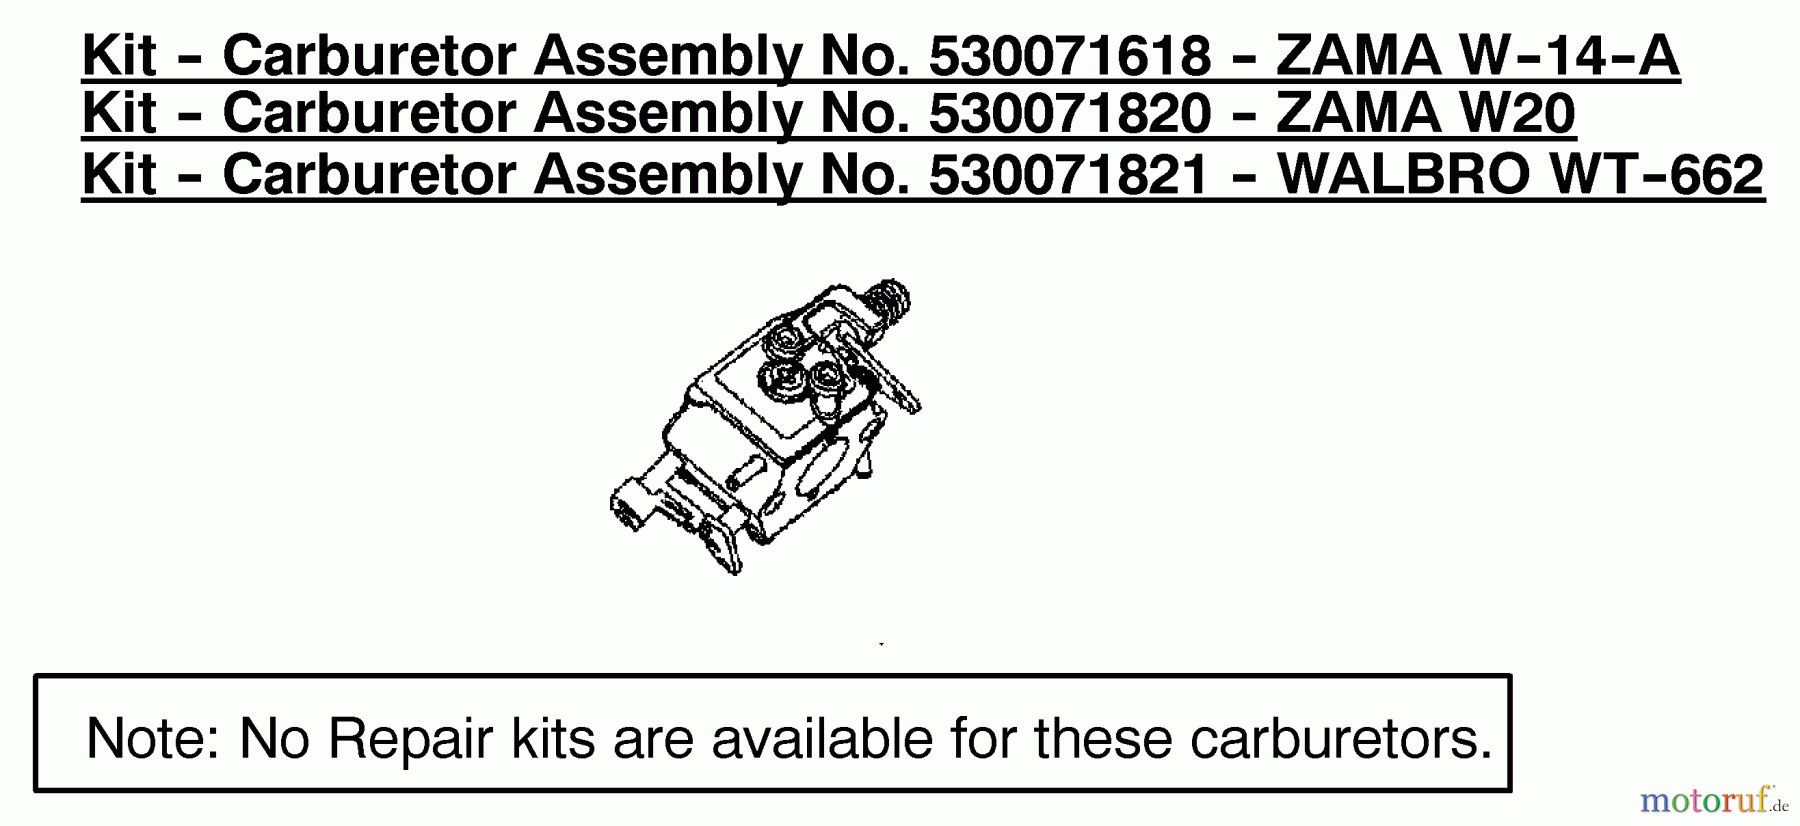  Poulan / Weed Eater Motorsägen 1975 (Type 2) - Poulan Woodshark Chainsaw Carburetor Assembly (Walbro WT-662) P/N 530071821